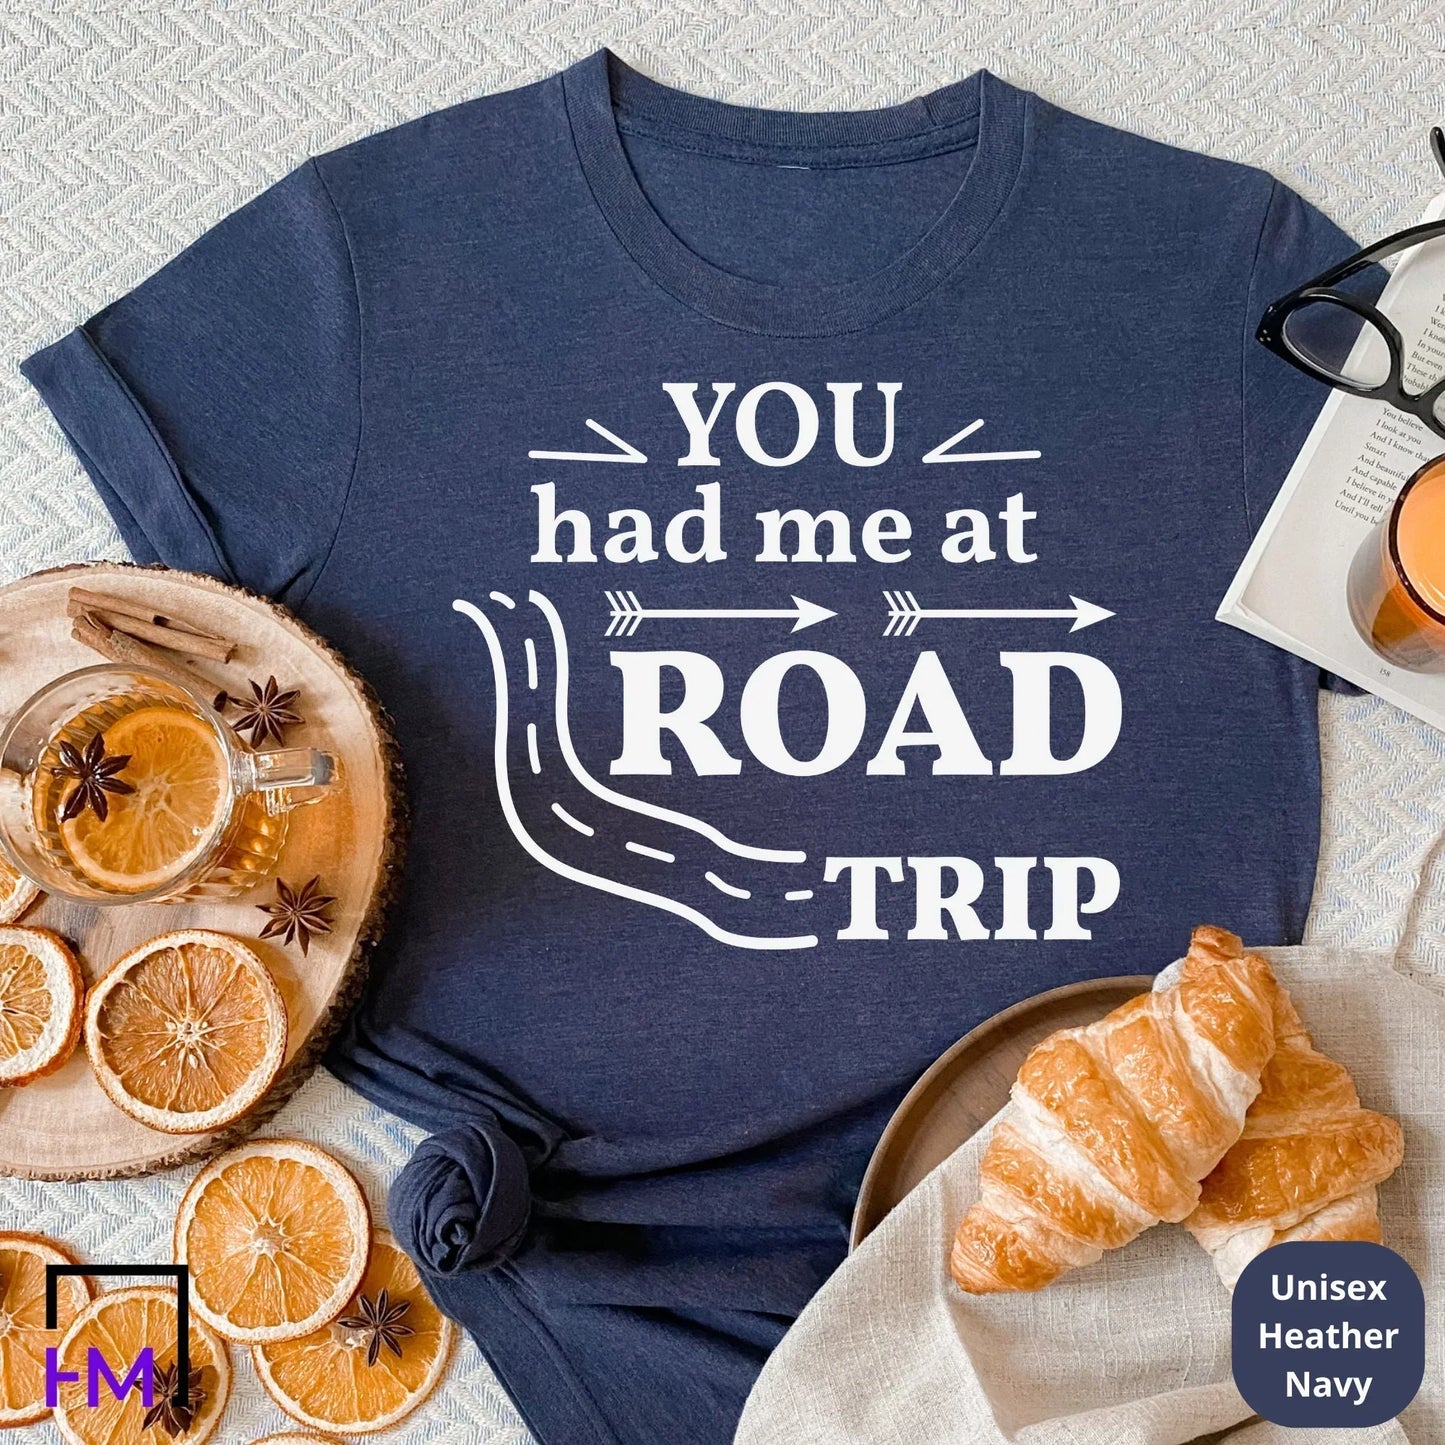 Road Trip Shirt-Gift for Travel Buddies